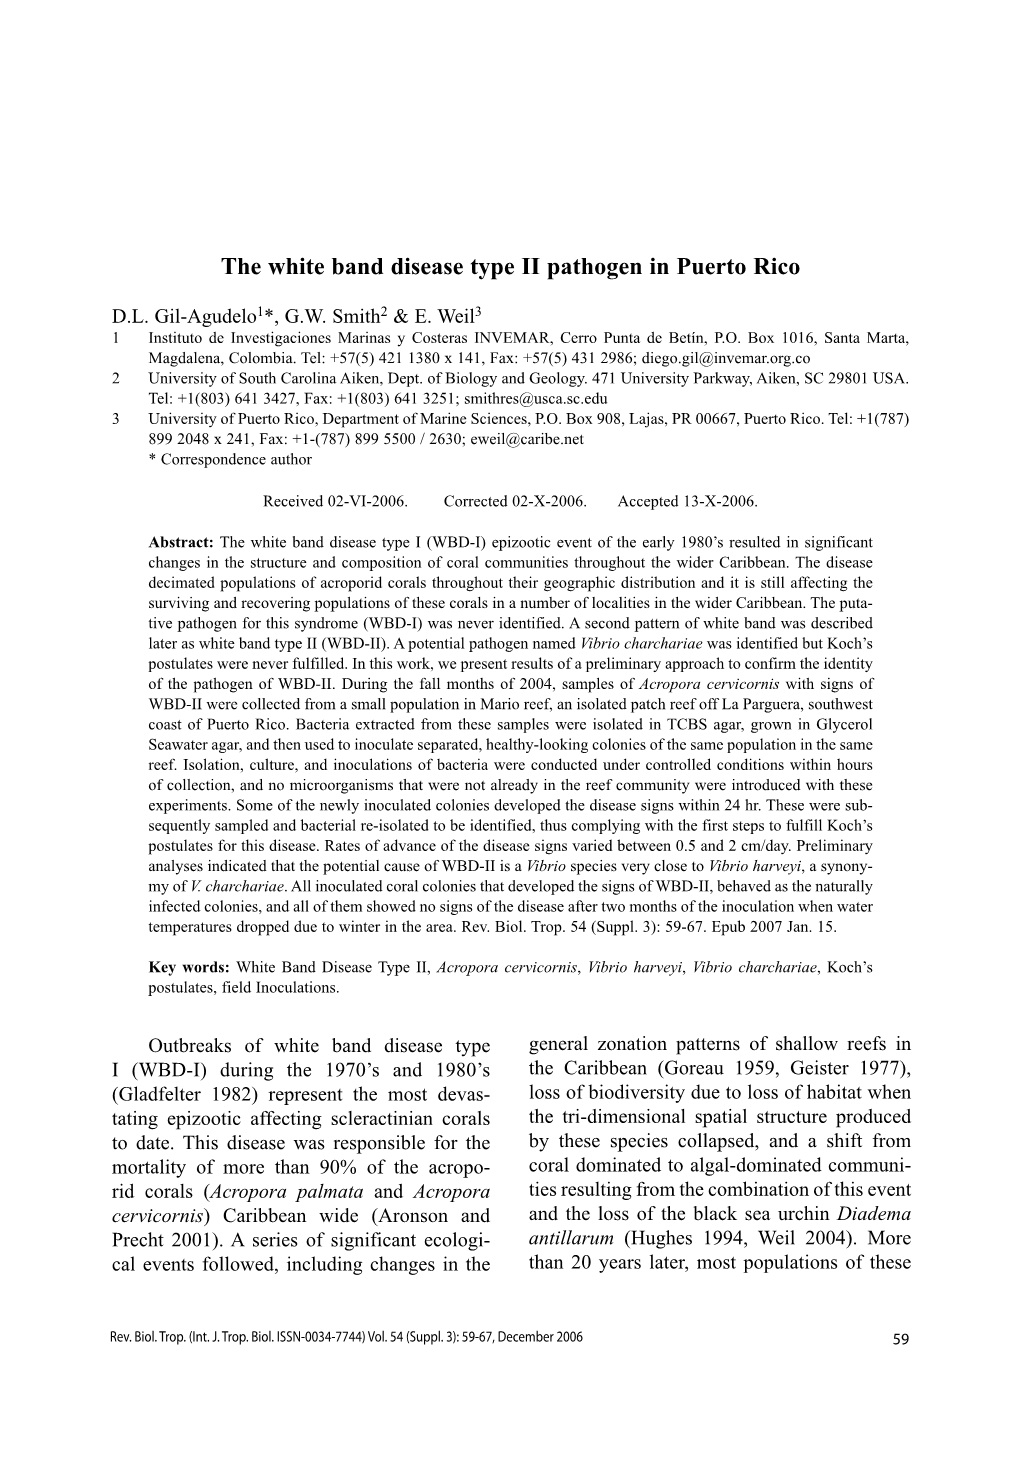 The White Band Disease Type II Pathogen in Puerto Rico